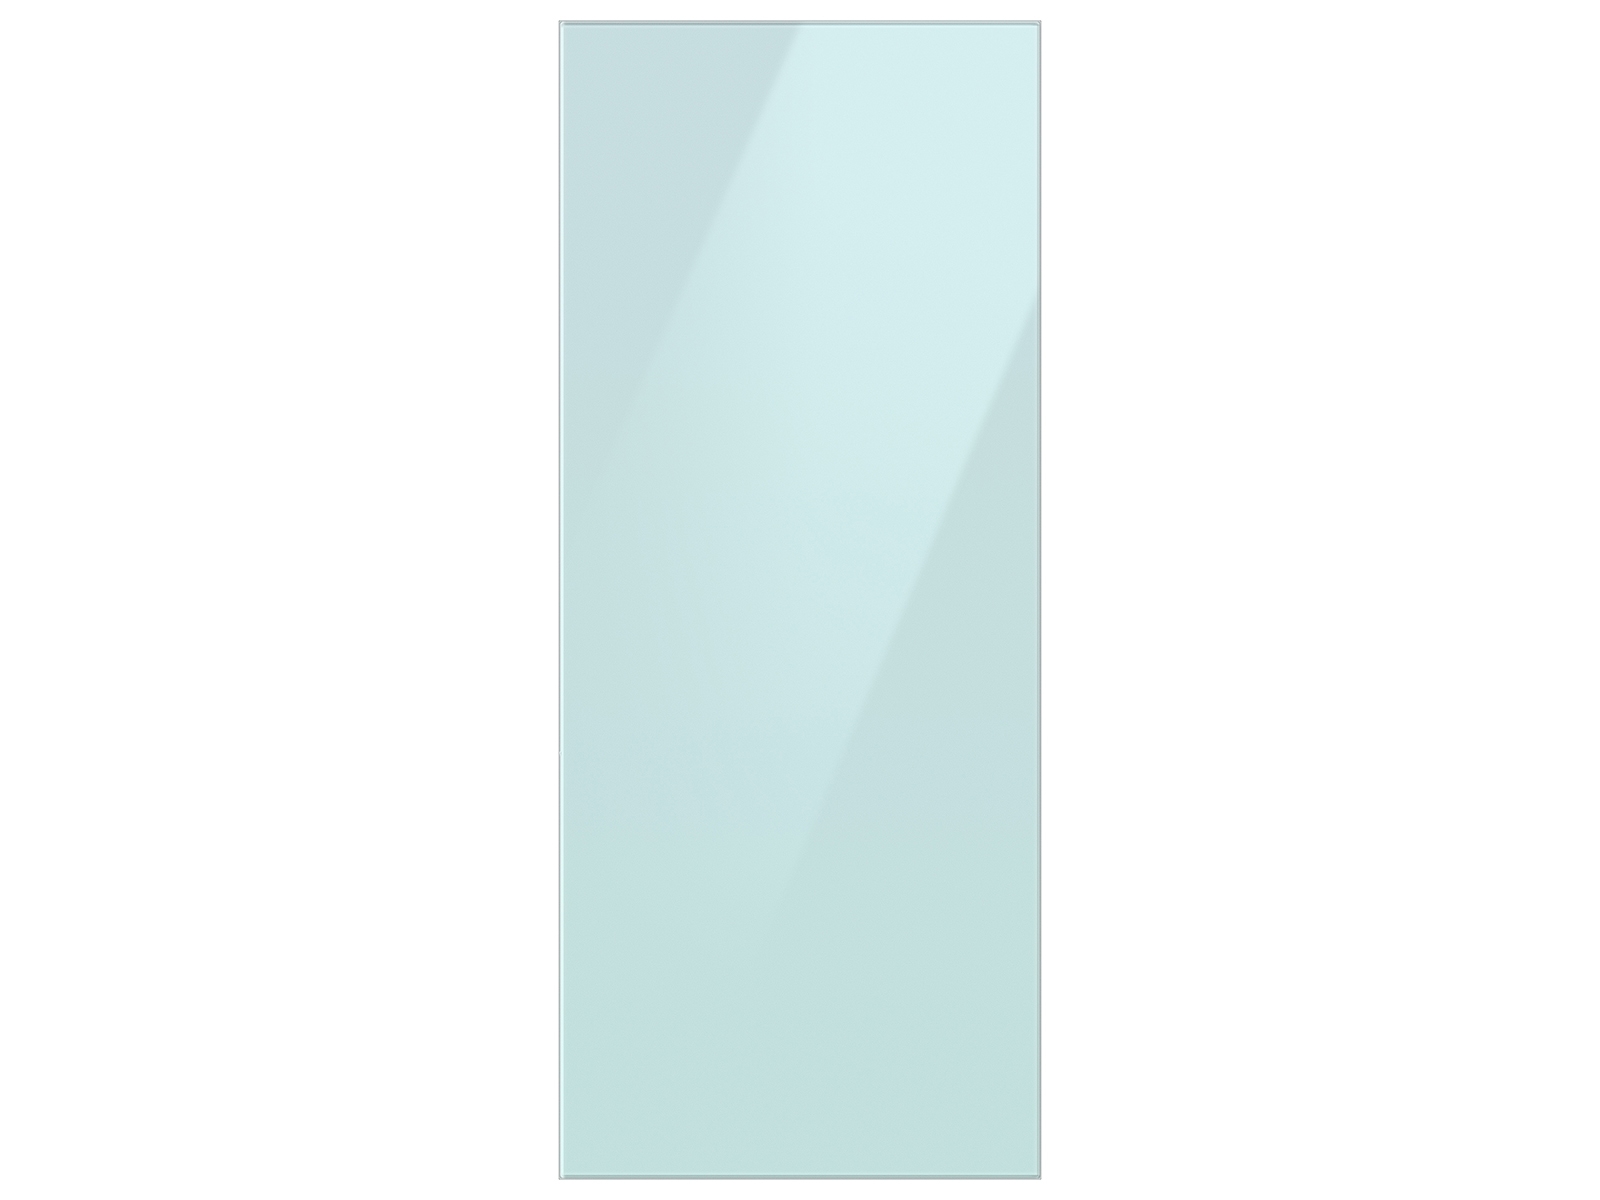 Thumbnail image of Bespoke 3-Door French Door Refrigerator Panel in Morning Blue Glass - Top Panel